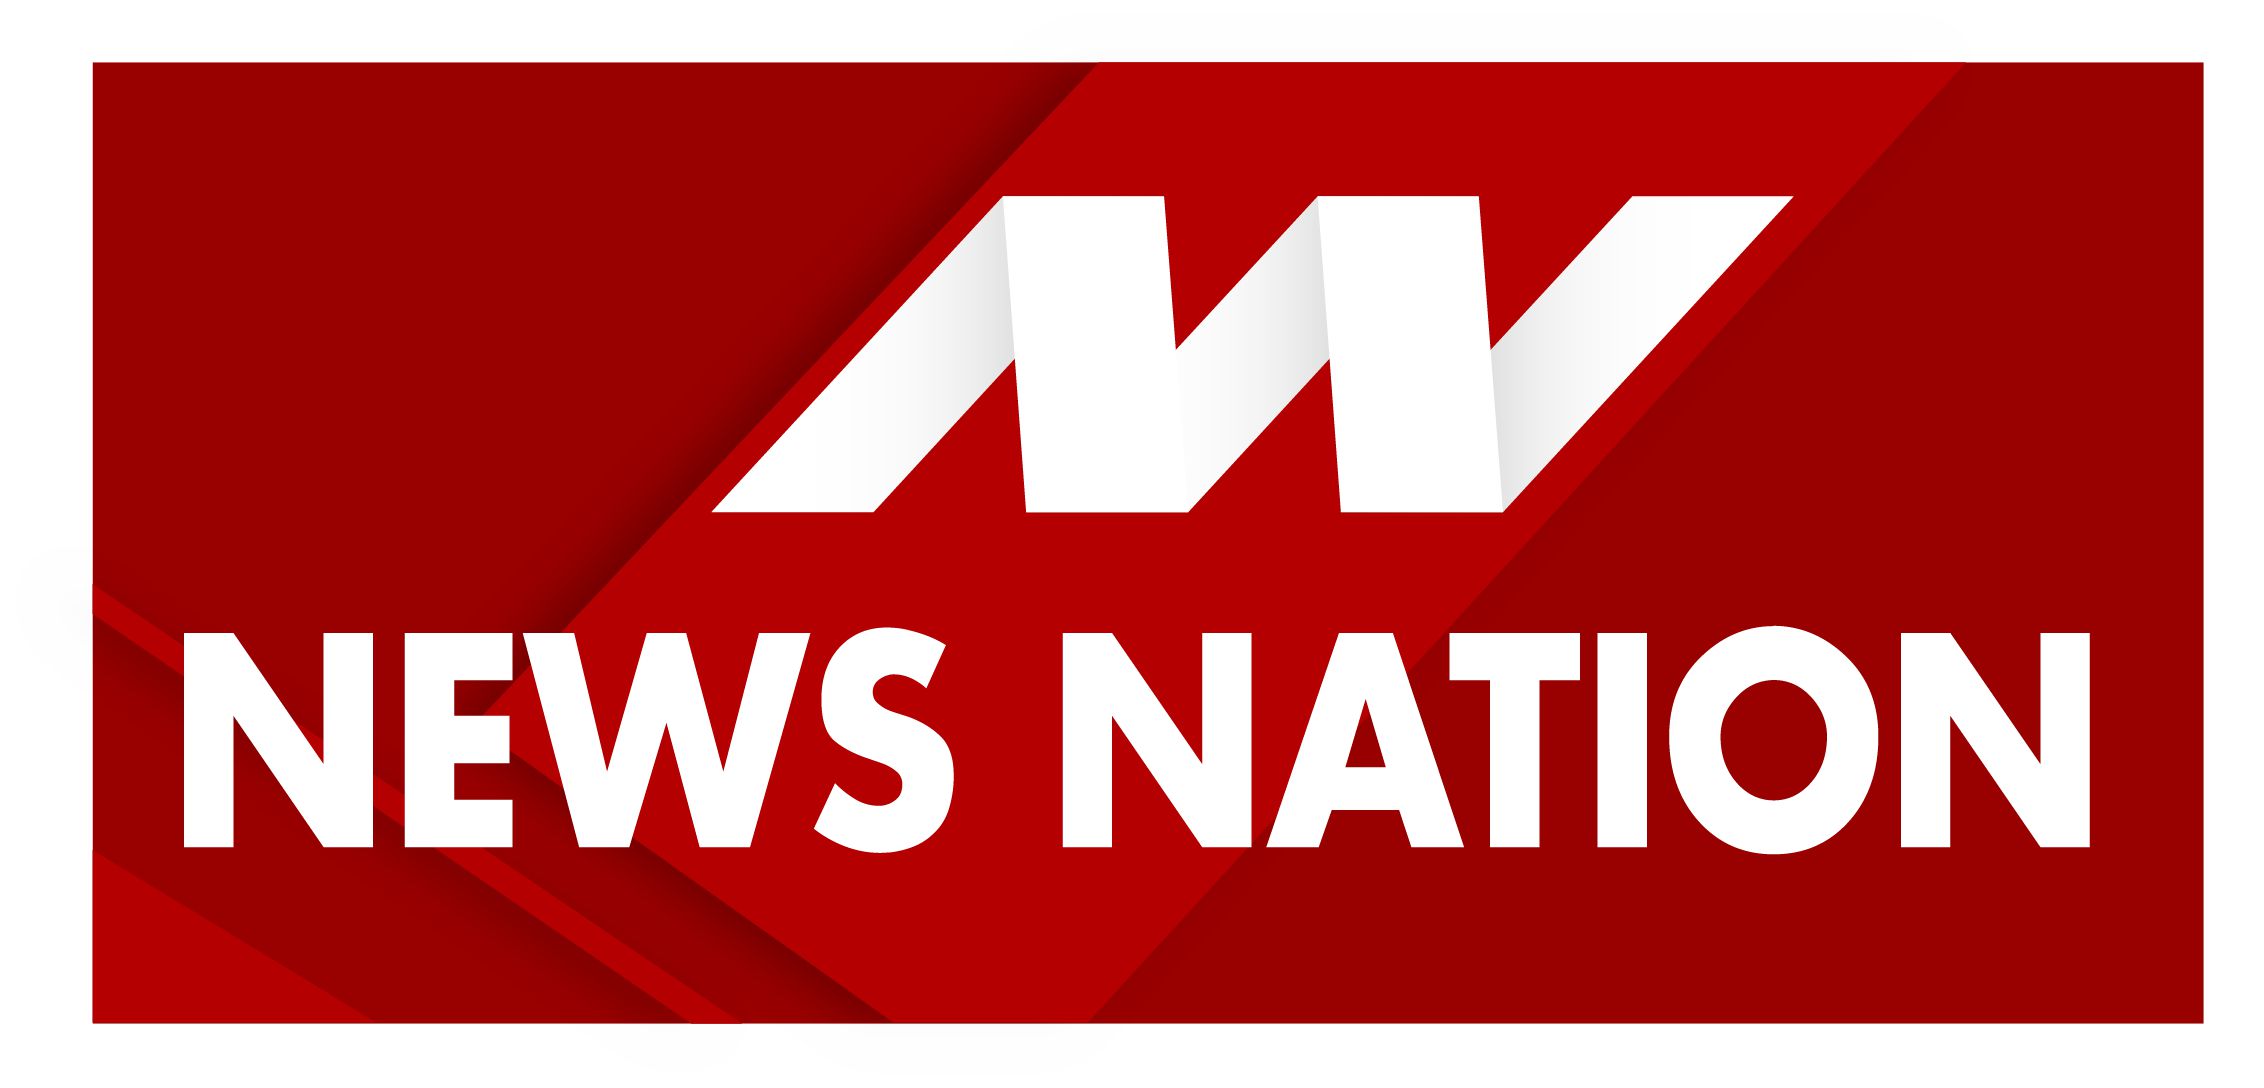 news-nation